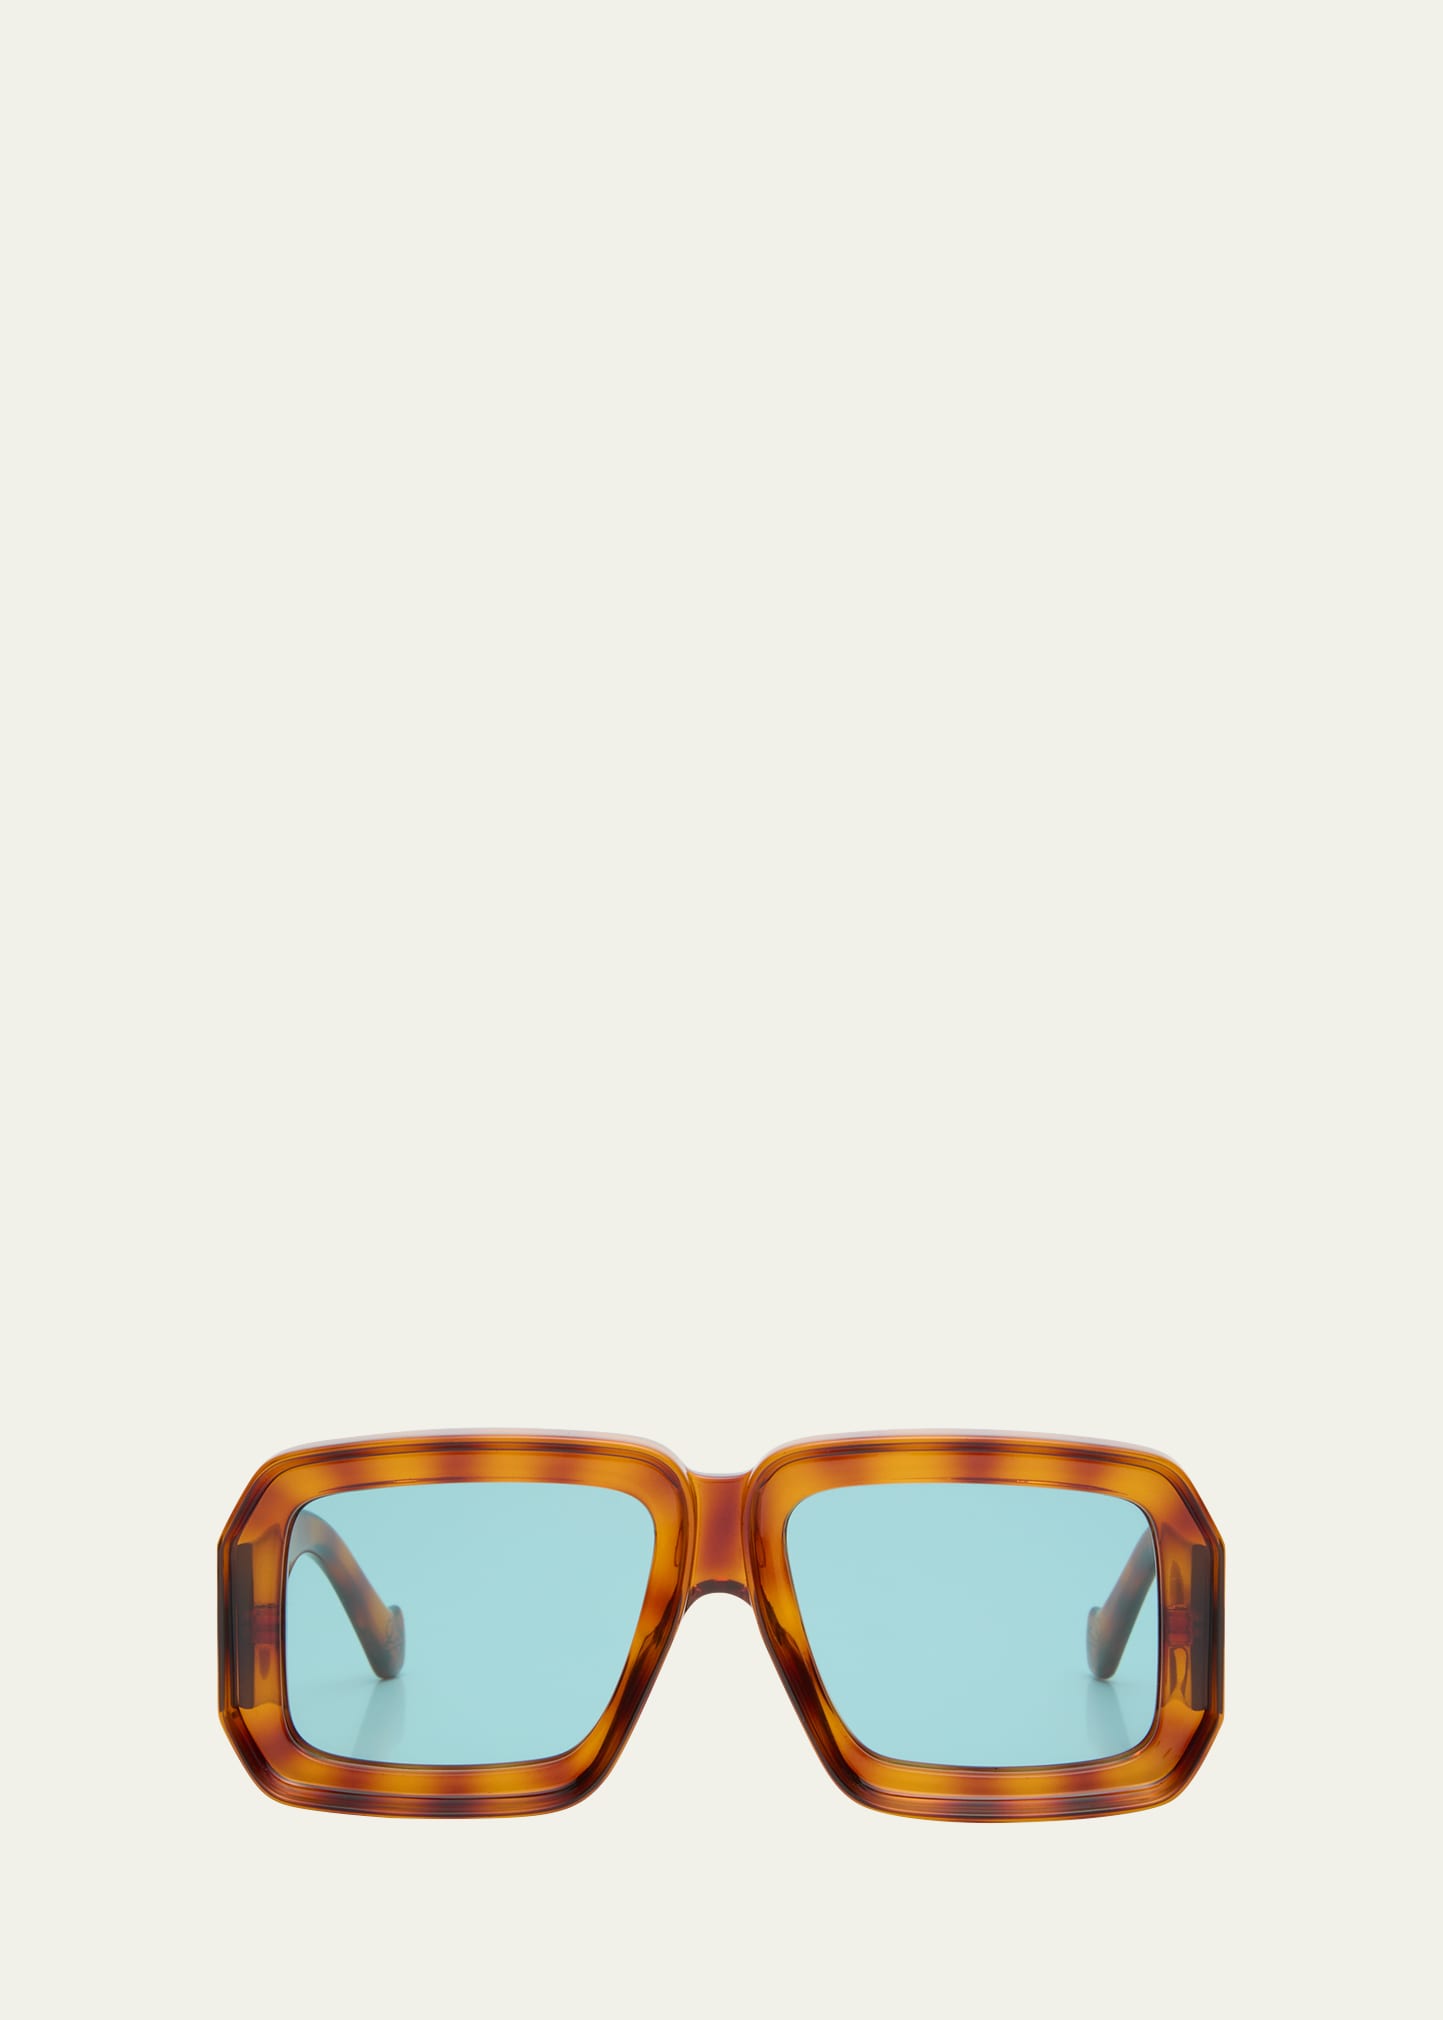 Saint Laurent Oversized Square Monochromatic Sunglasses - Bergdorf Goodman